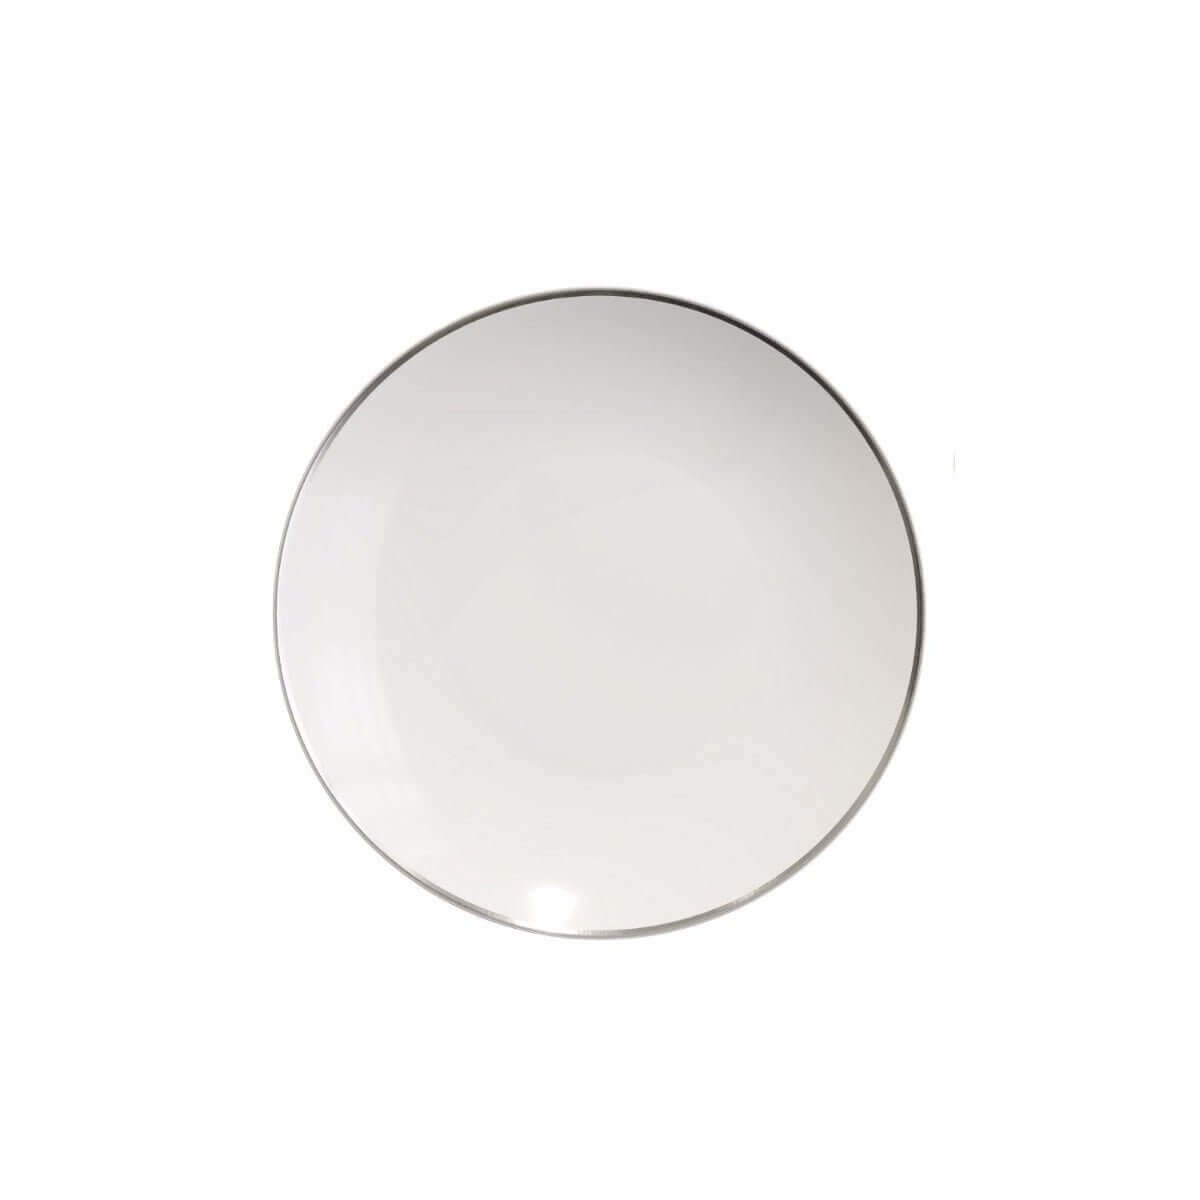 6" Classic Silver Design Plastic Plates (40 Count) - Yom Tov Settings